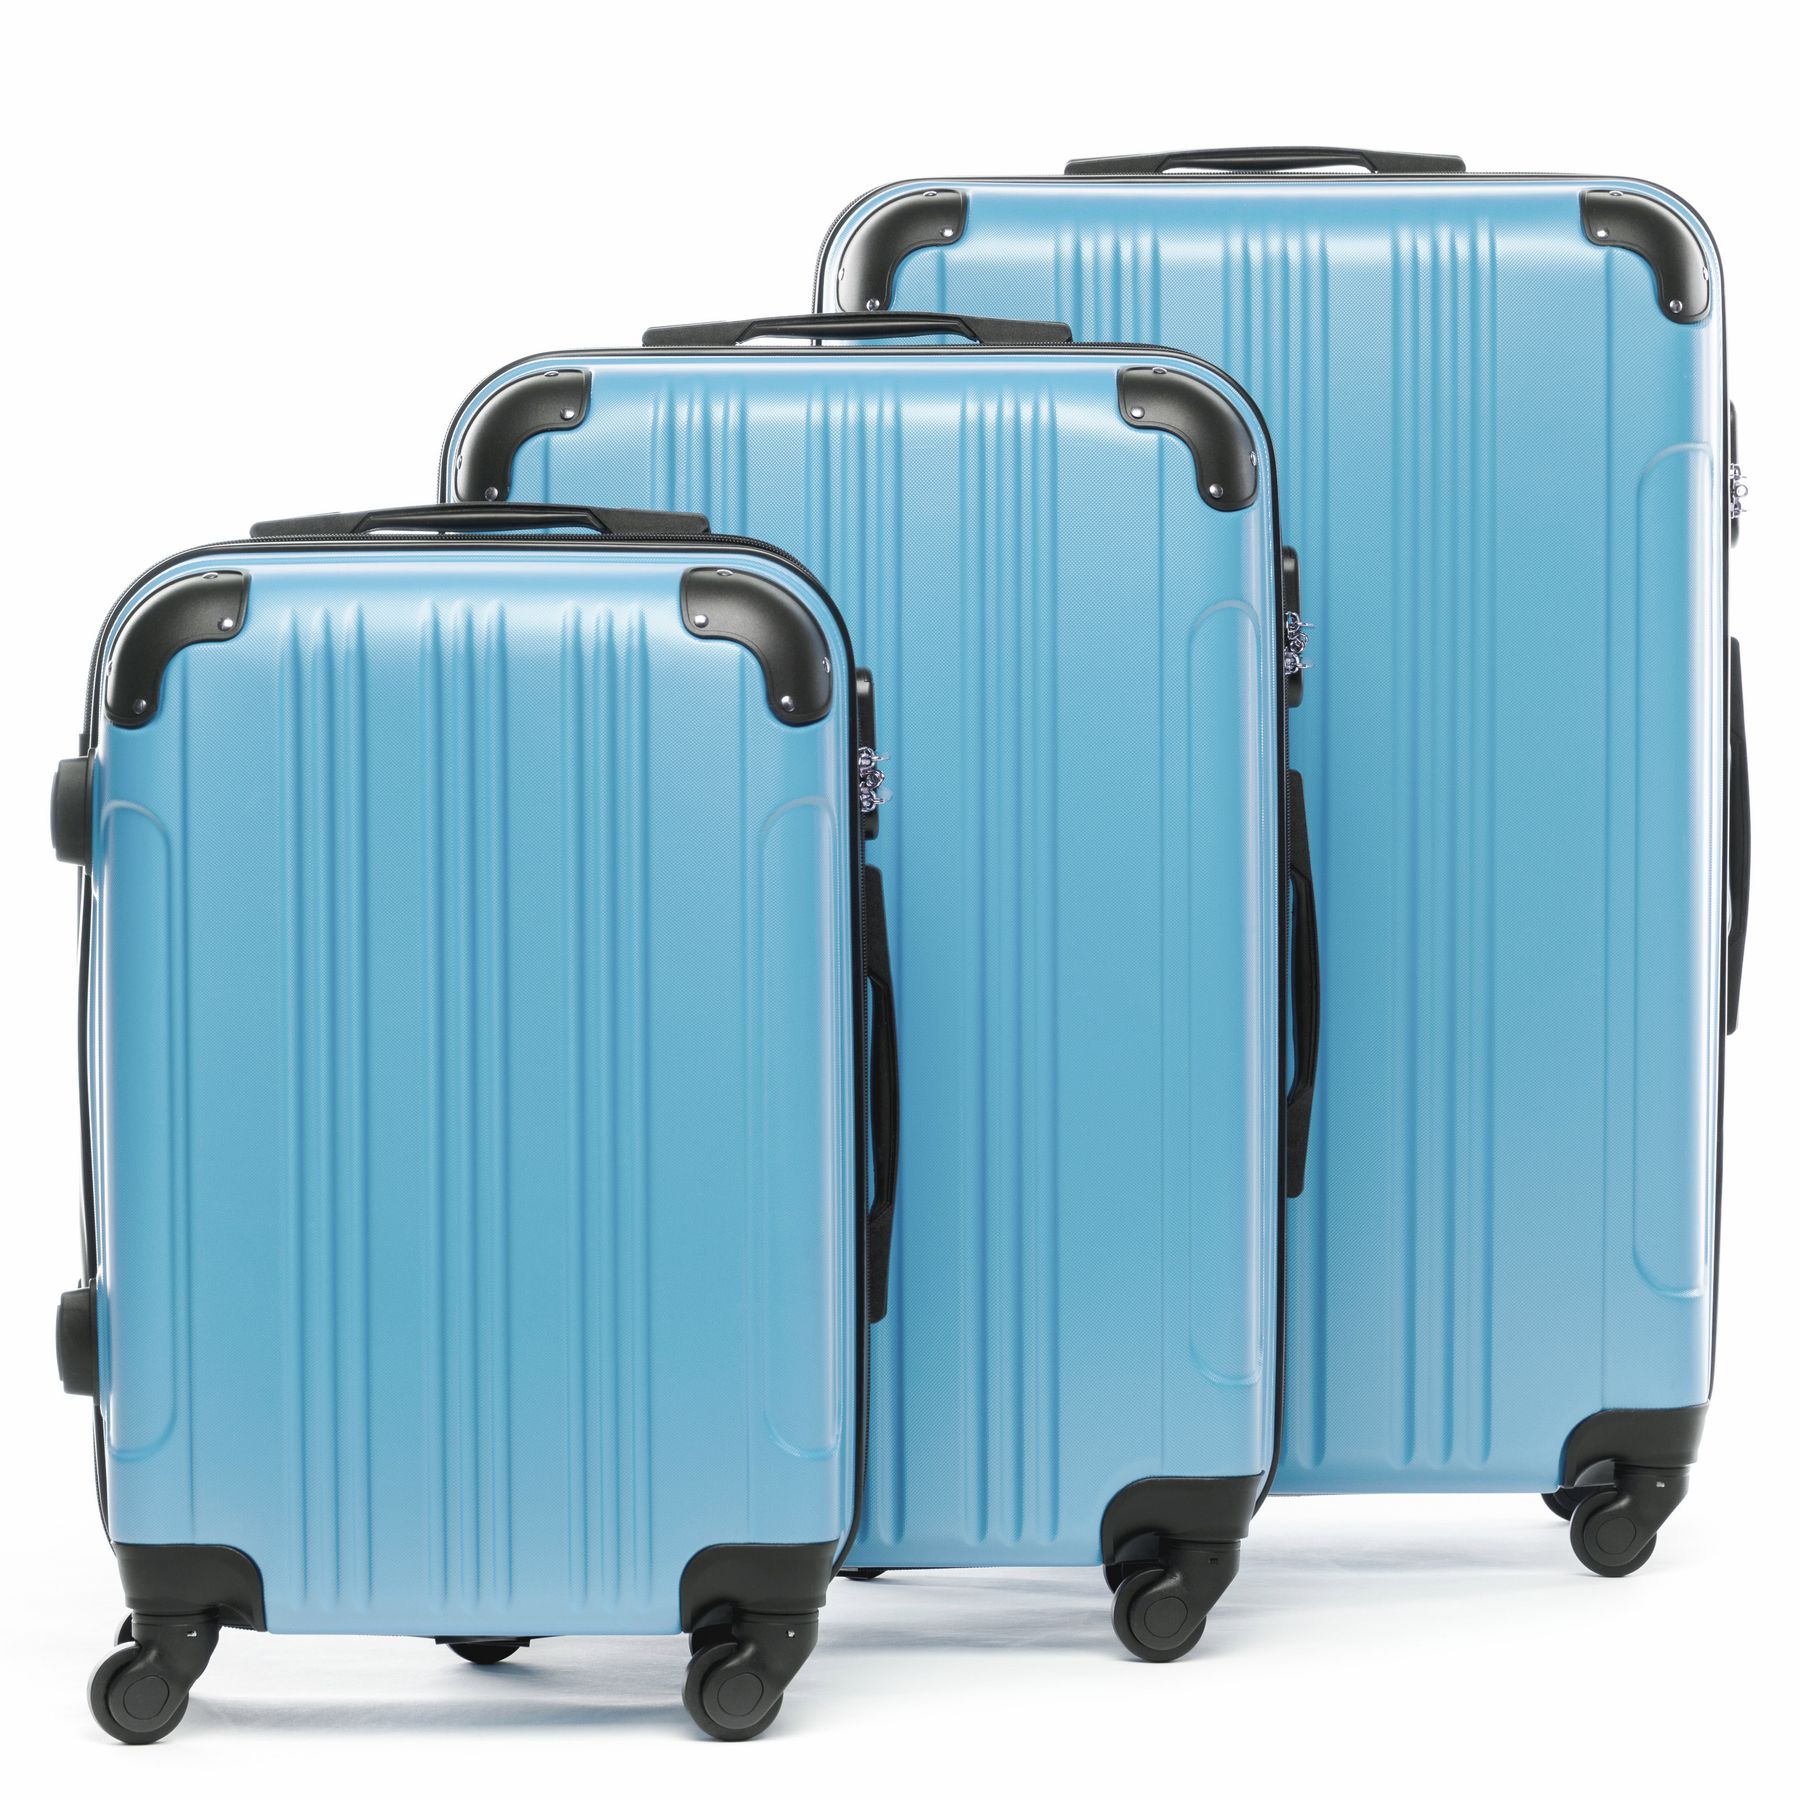 luggage set 3-kofferset-xb09 FERGÉ ABS QUÉBEC parent 29650